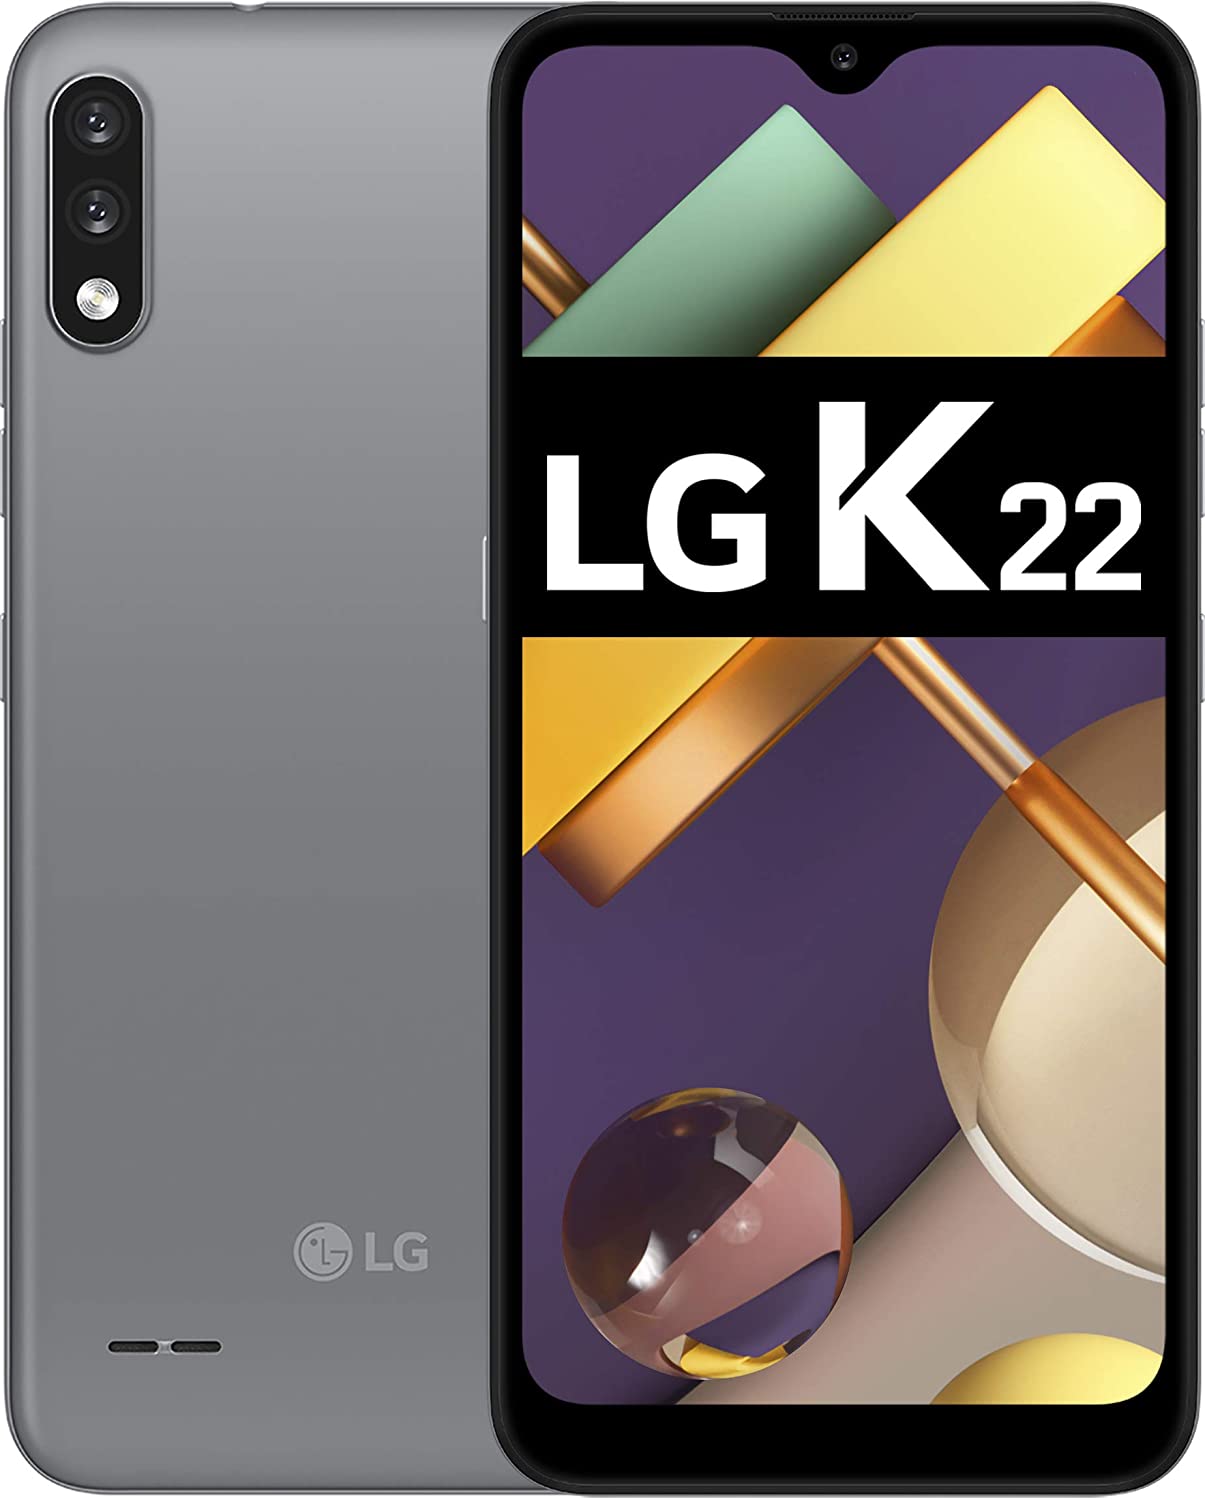 LG K22 (Sprint Carrier Only)